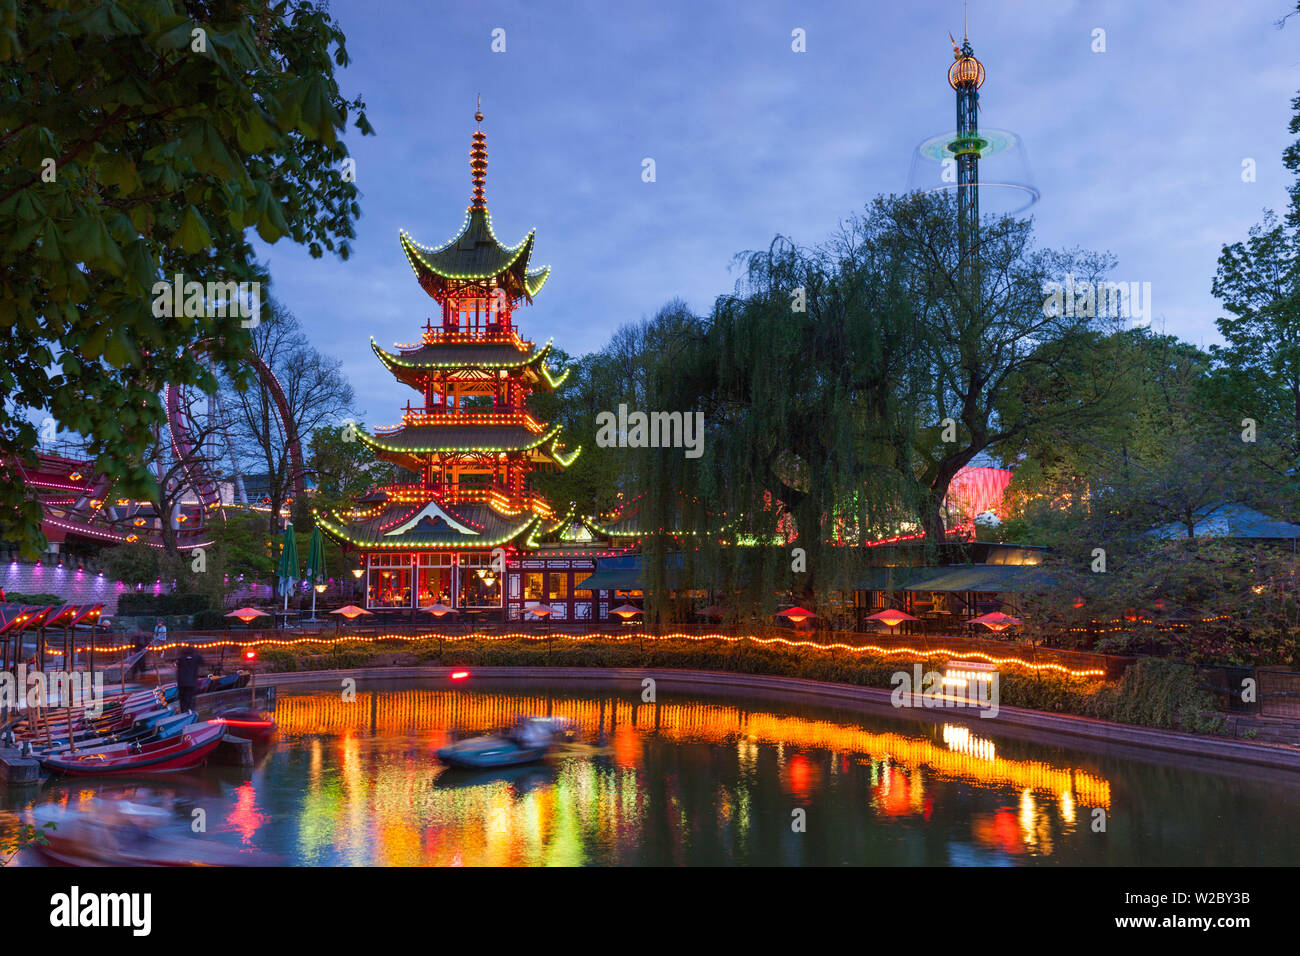 Denmark, Zealand, Copenhagen, Tivoli Gardens Amuseument Park, Chinese pavillion Stock Photo